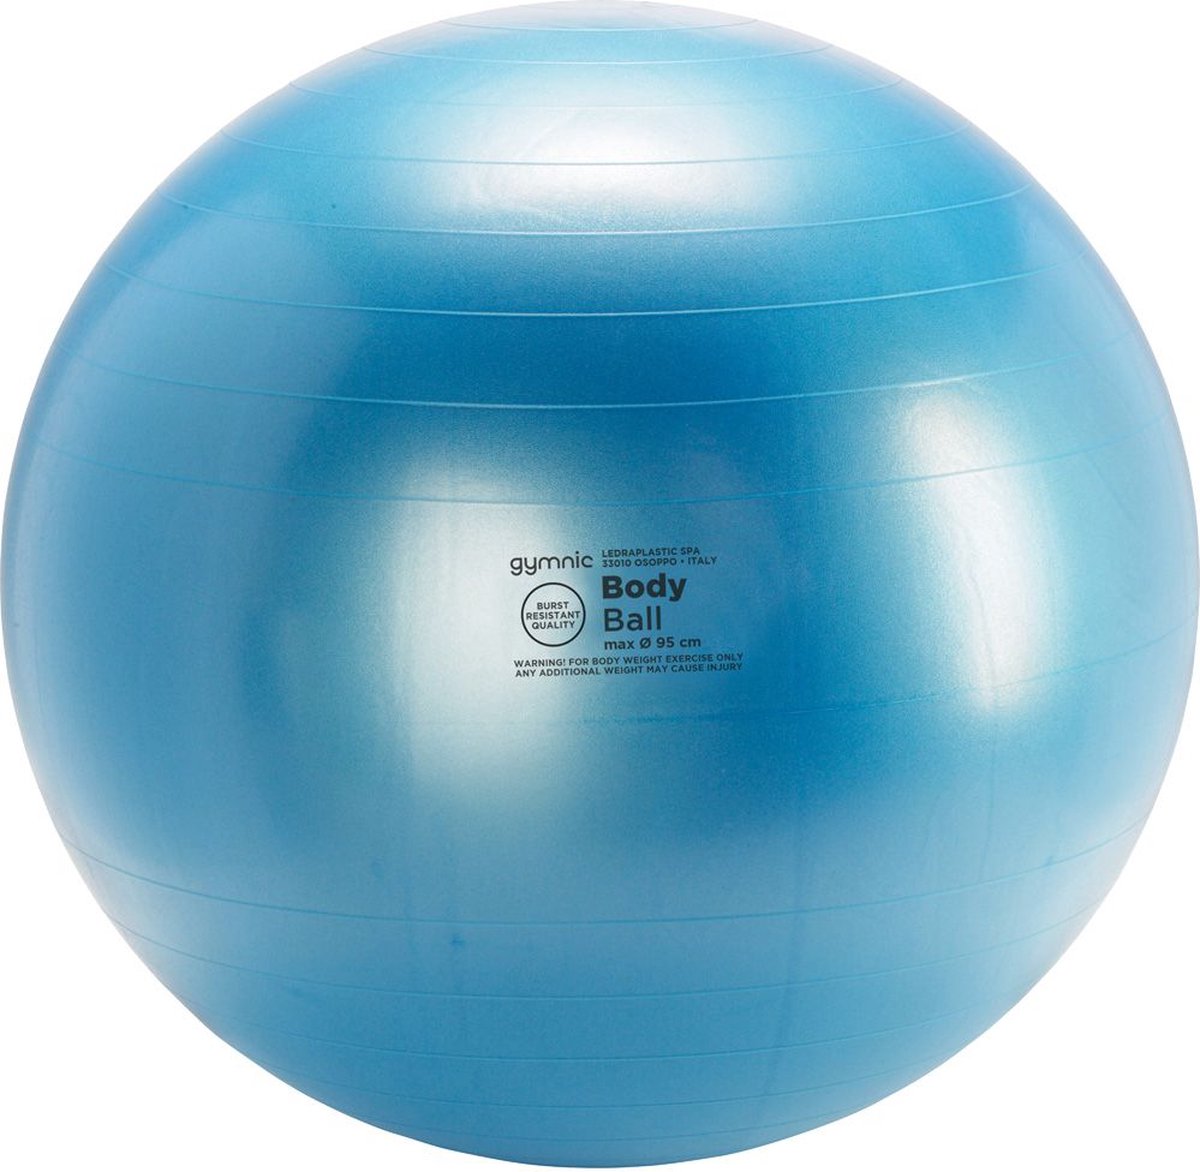 Gymnic Body Ball - Ø 95 cm - Blauw